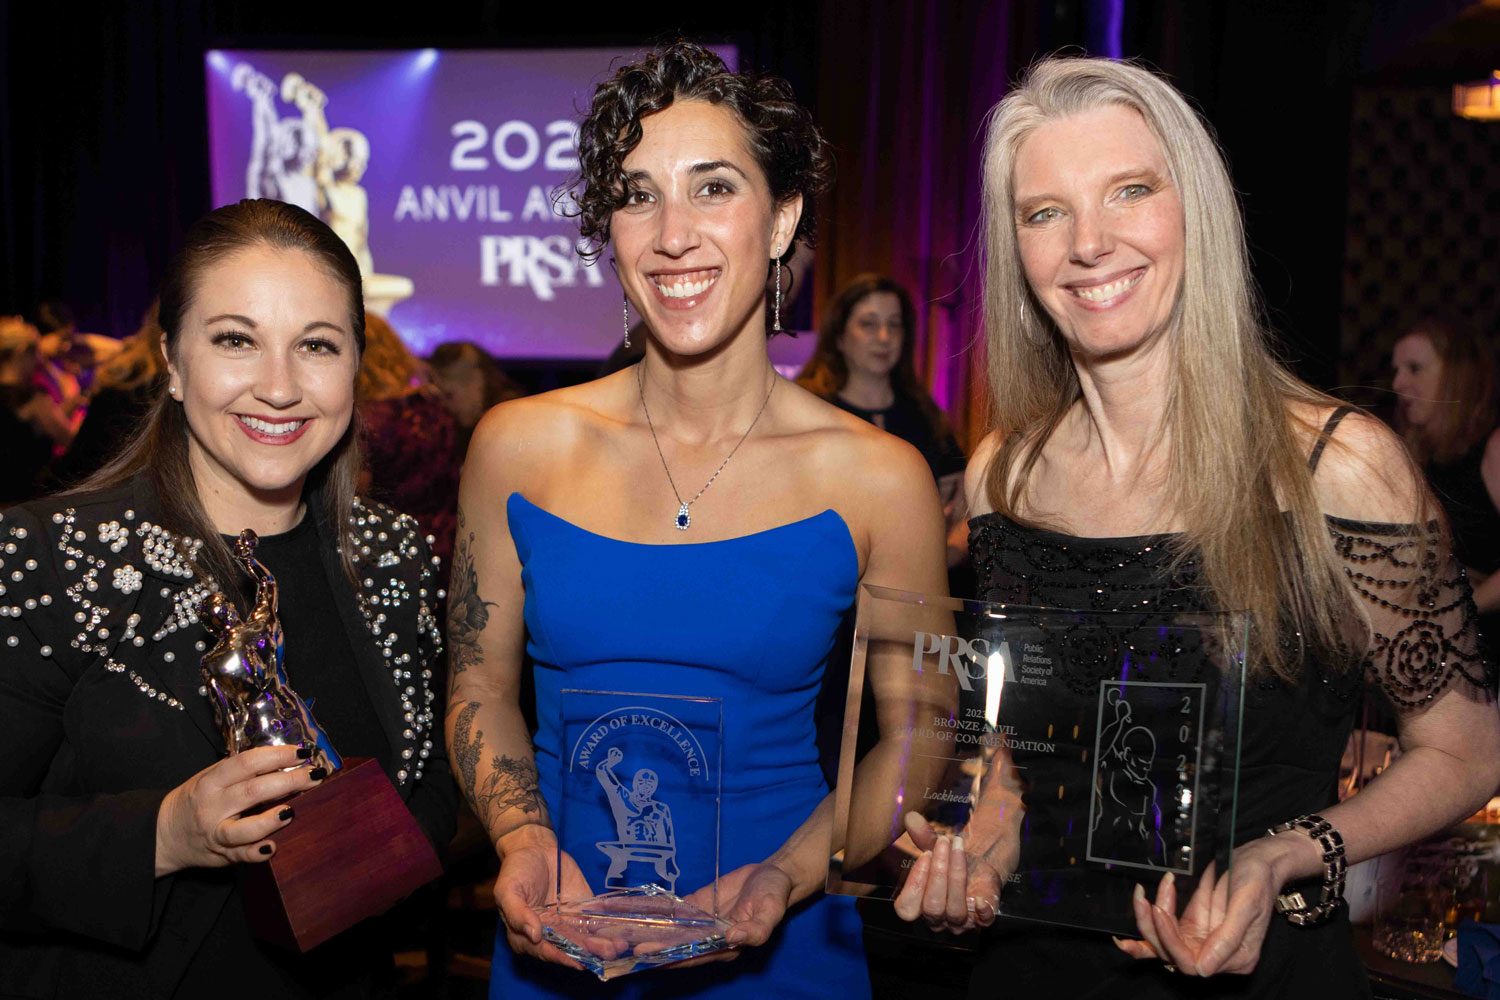 three women holding award trophies